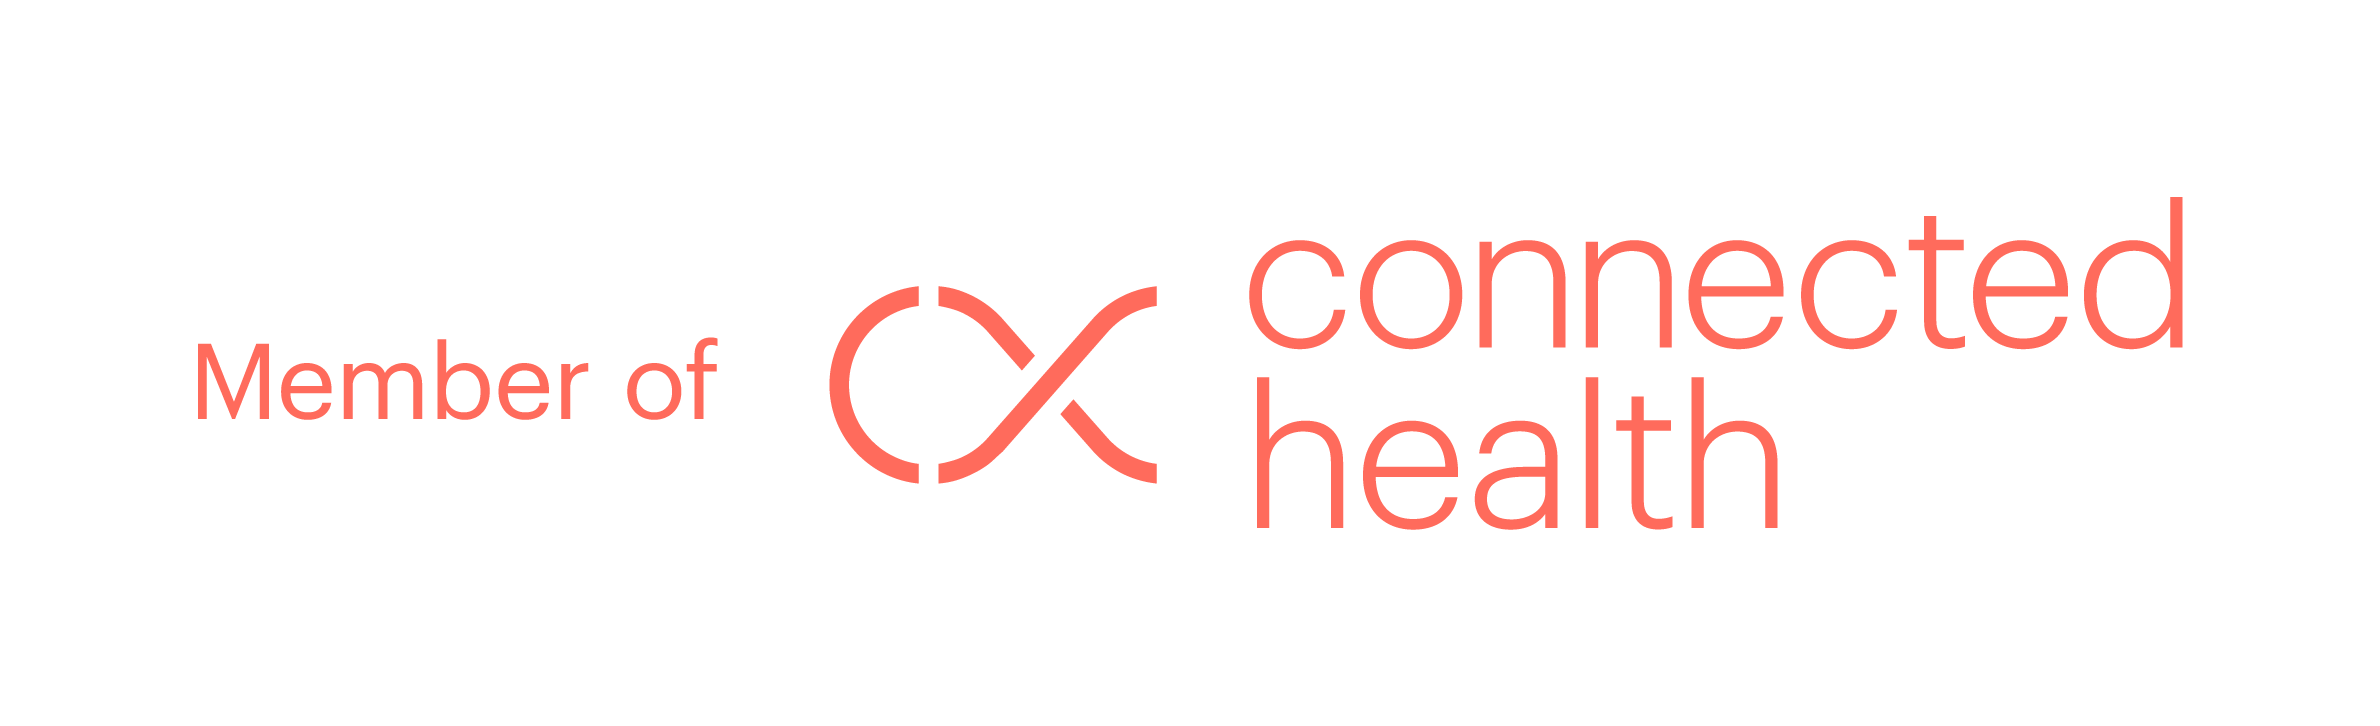 ConnectedHealth member logo